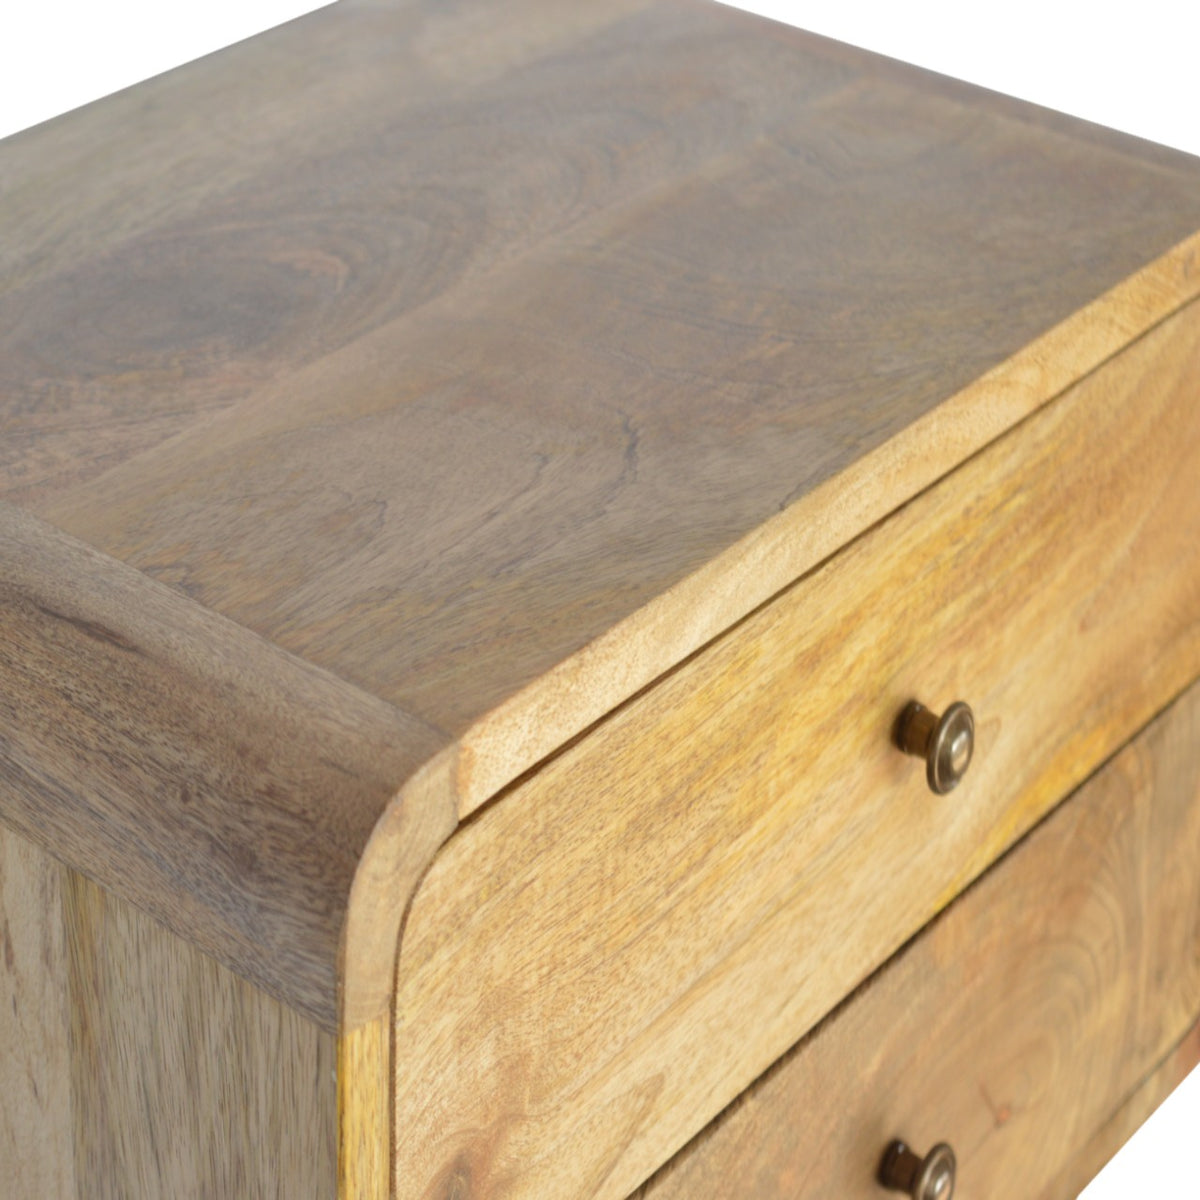 Buy Light wood bedside table 2 drawers UK 